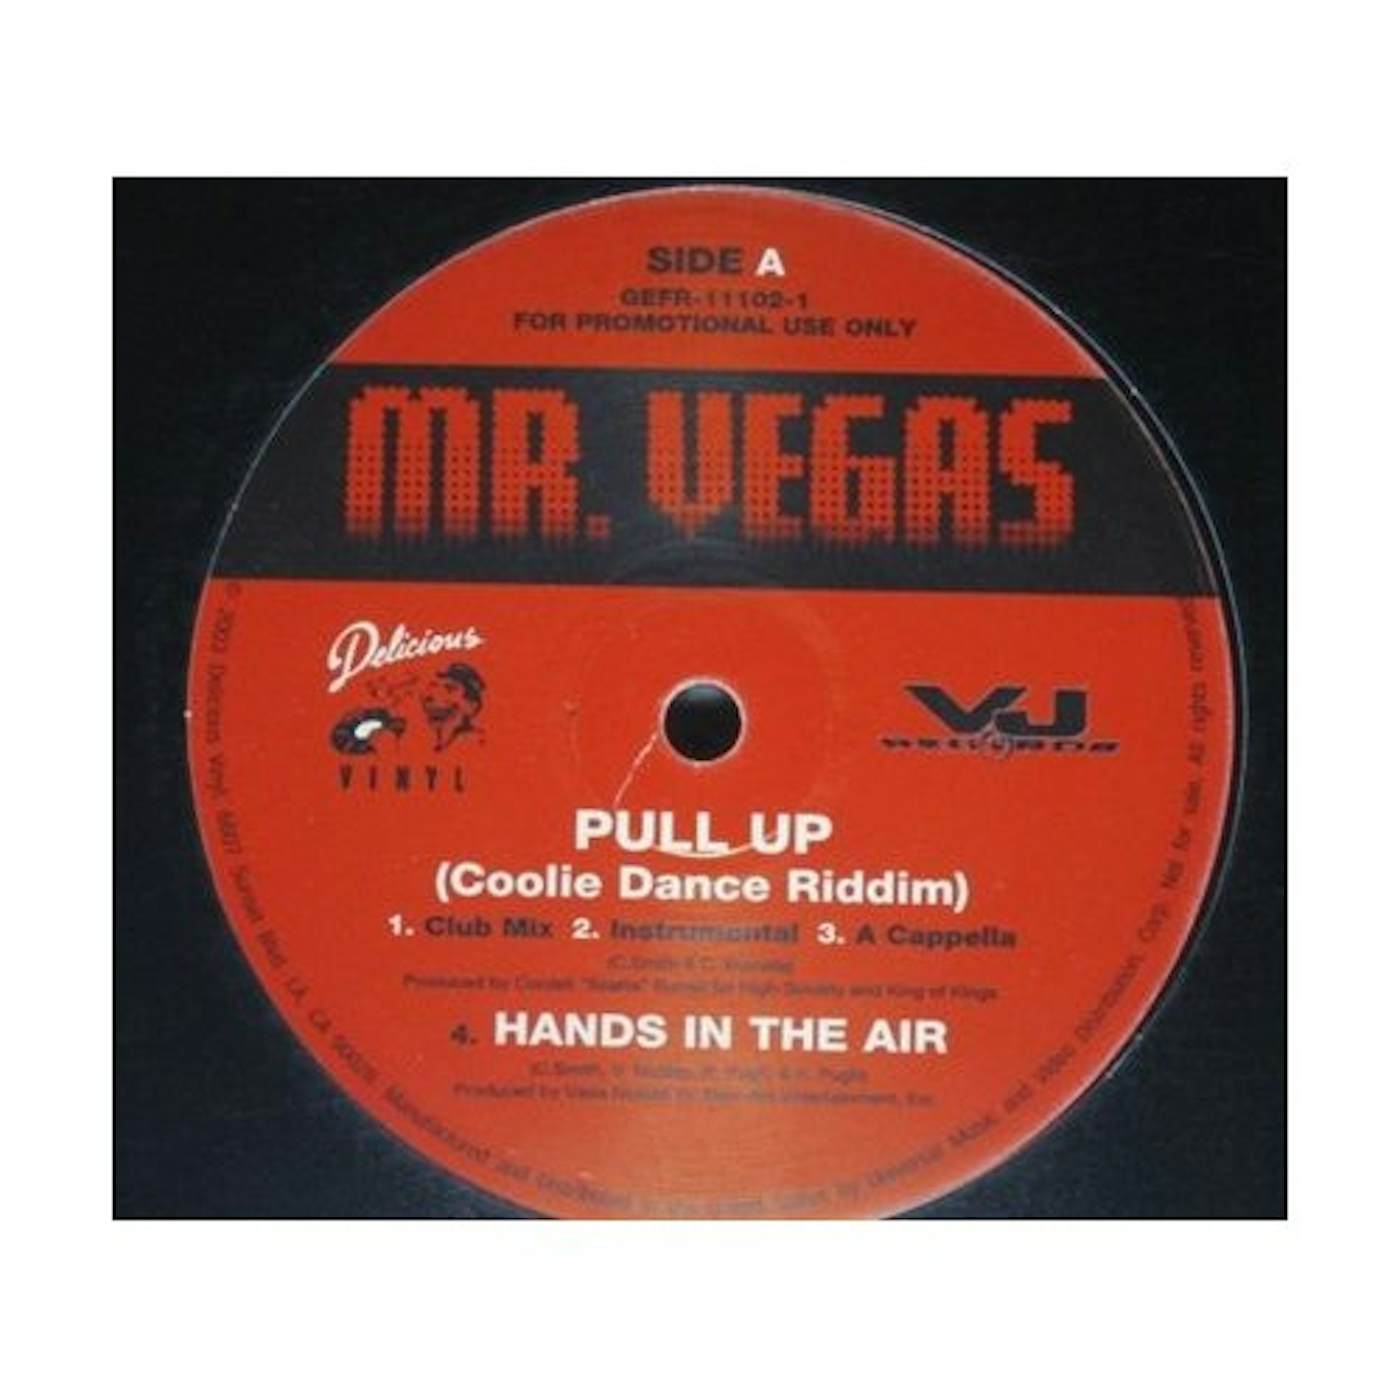 Mr. Vegas TAMALE / PULL UP Vinyl Record